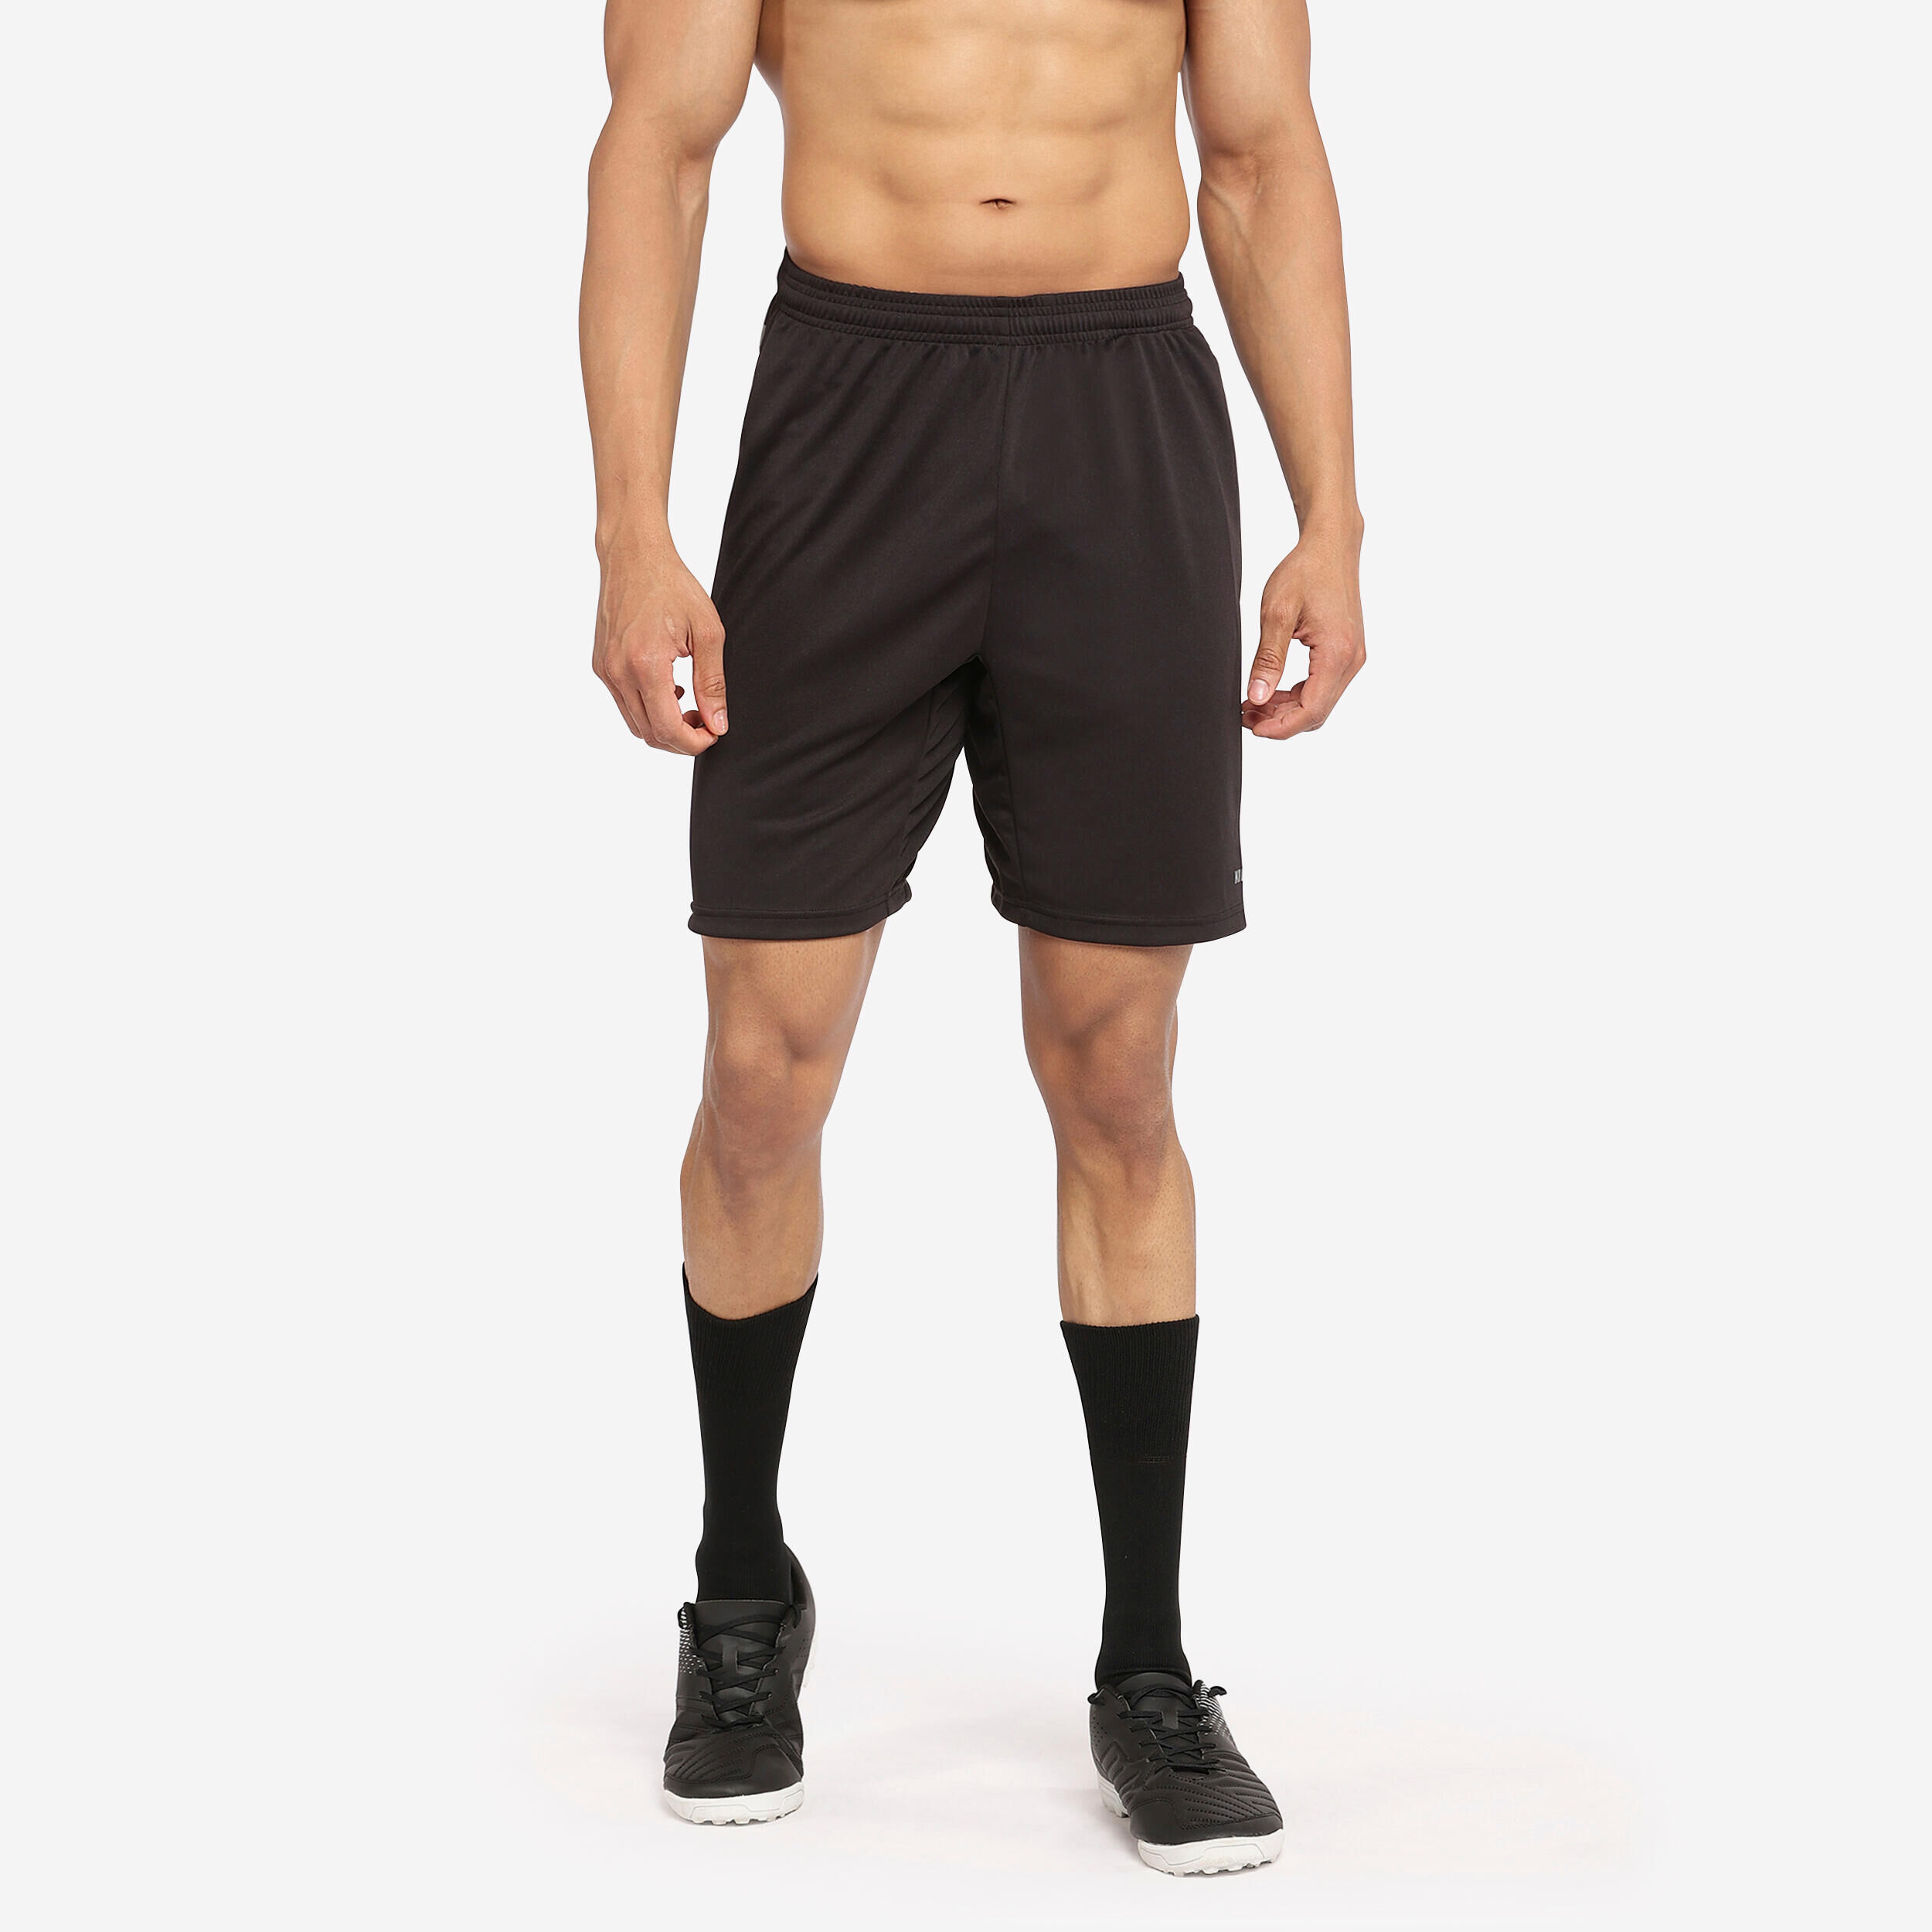 KIPSTA F100 Adult Football Shorts - Black